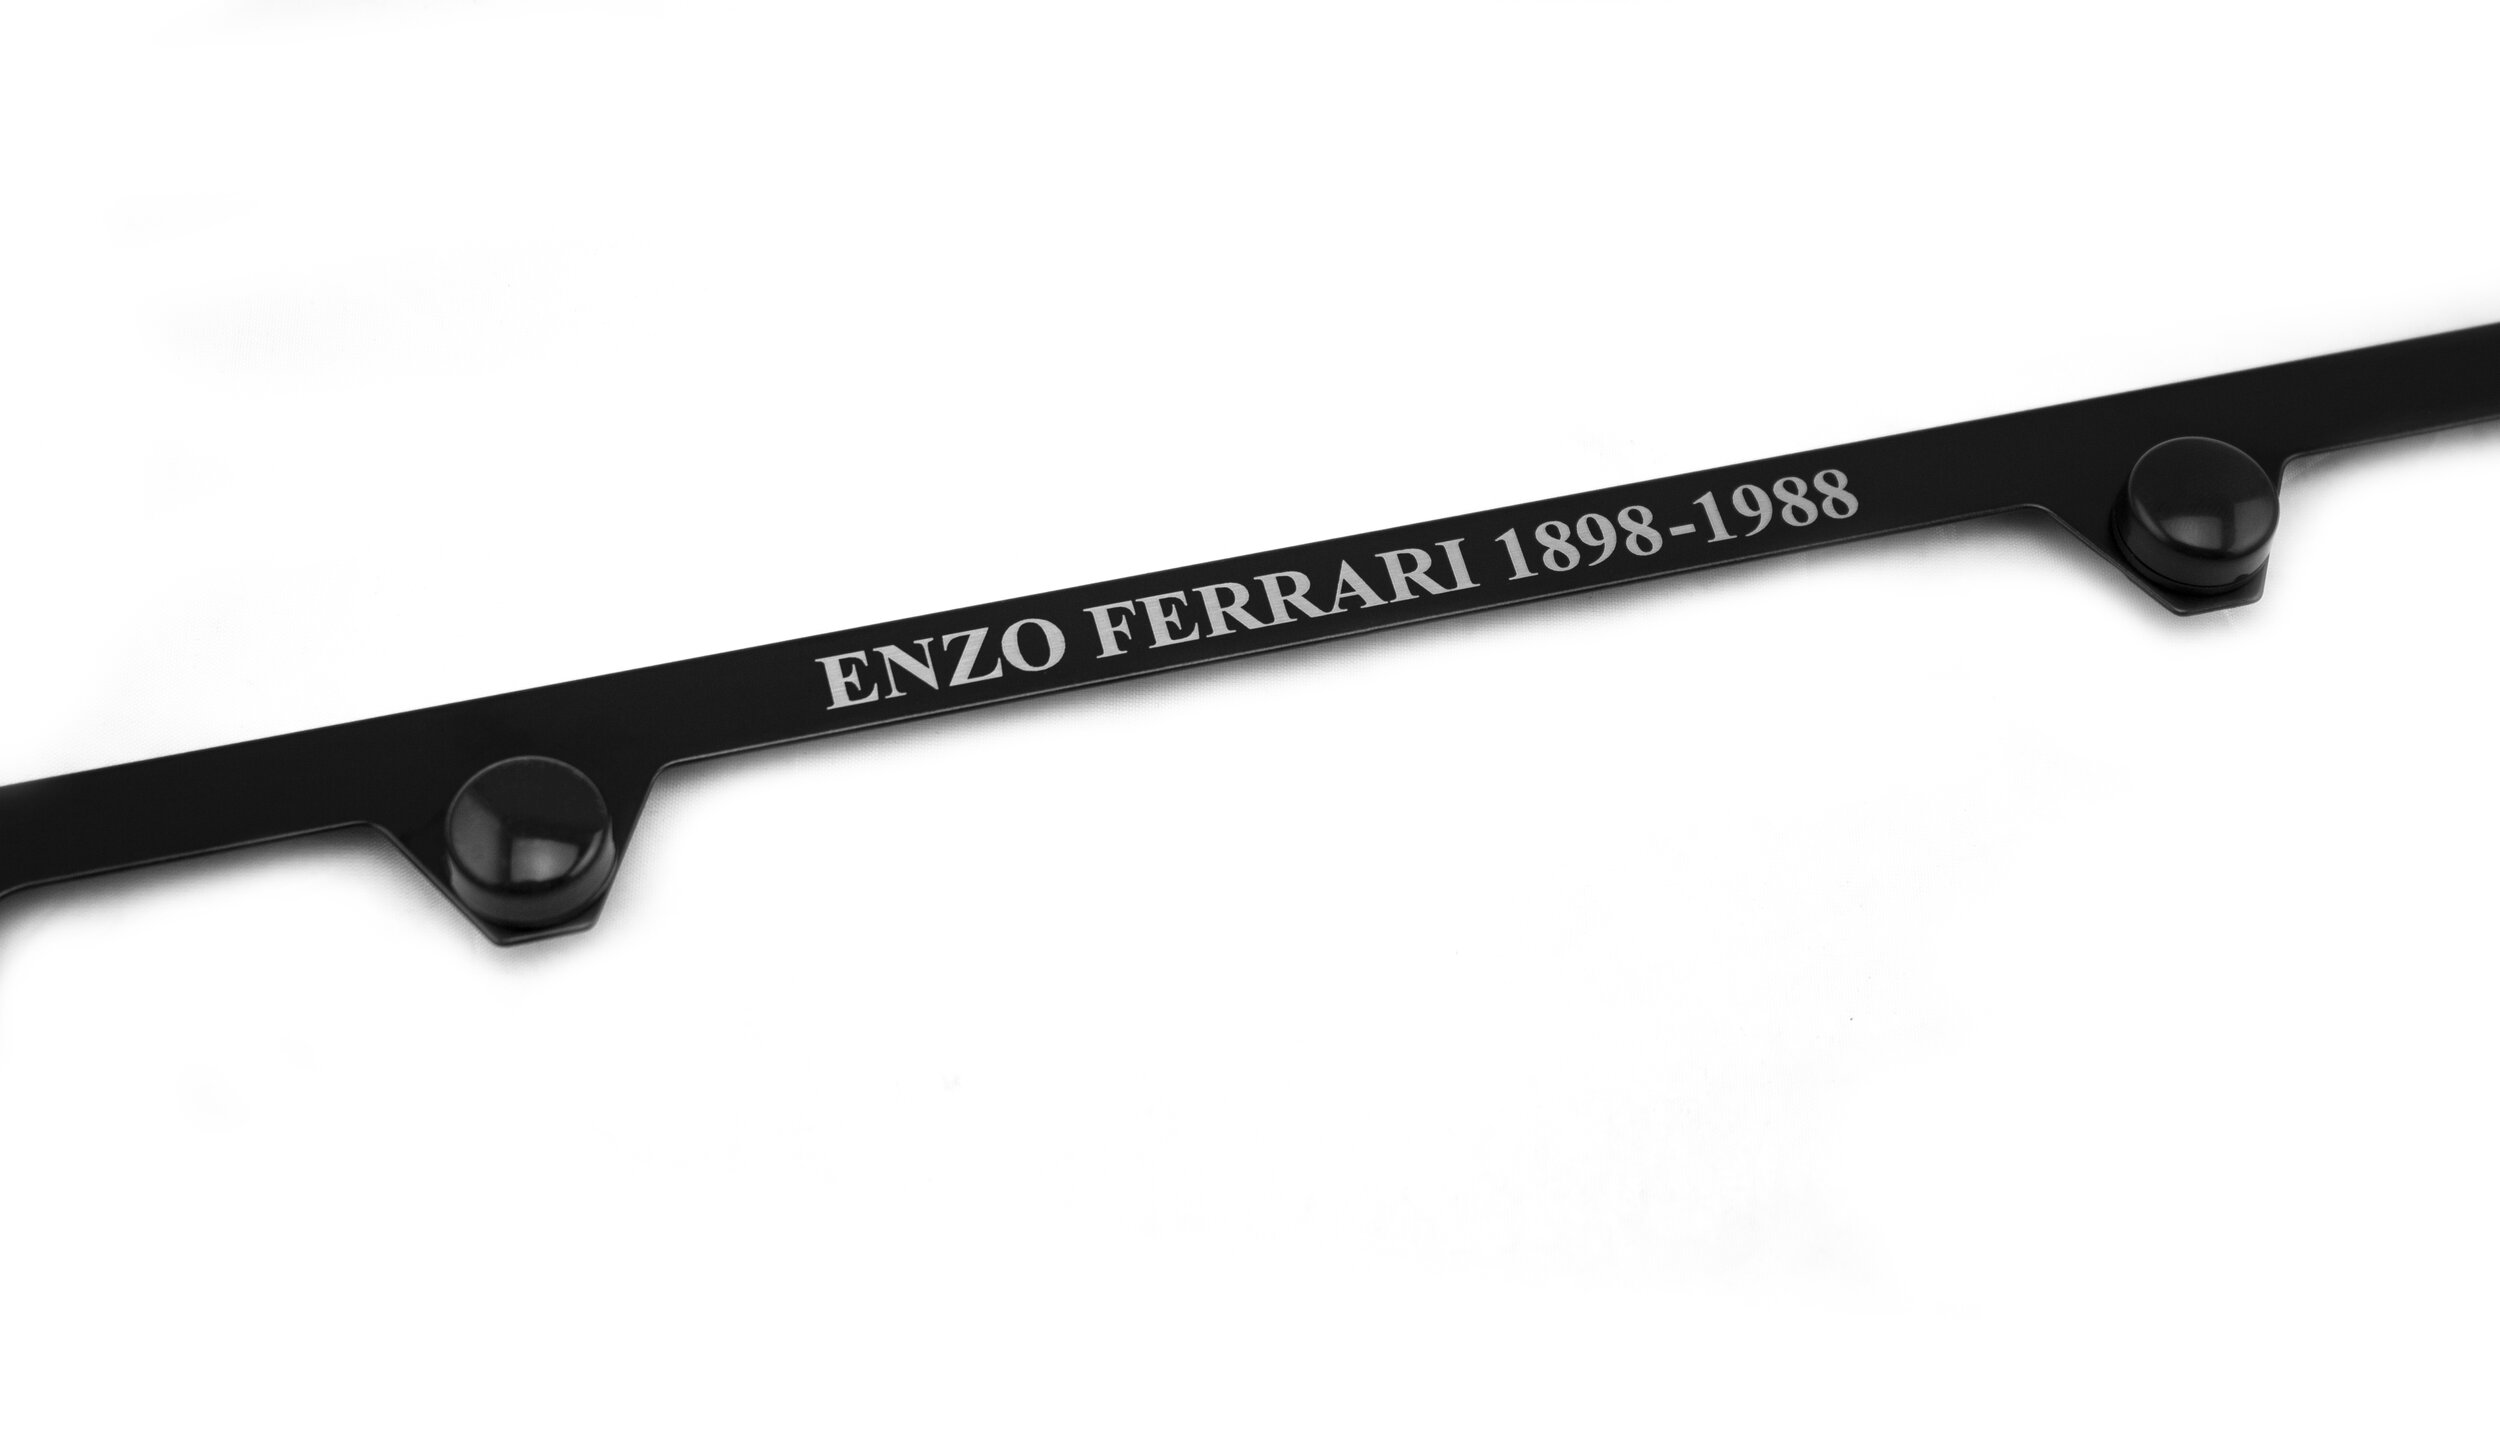 Camisasca Enzo Ferrari Stainless Steel Black License Plate Frame (Copy)